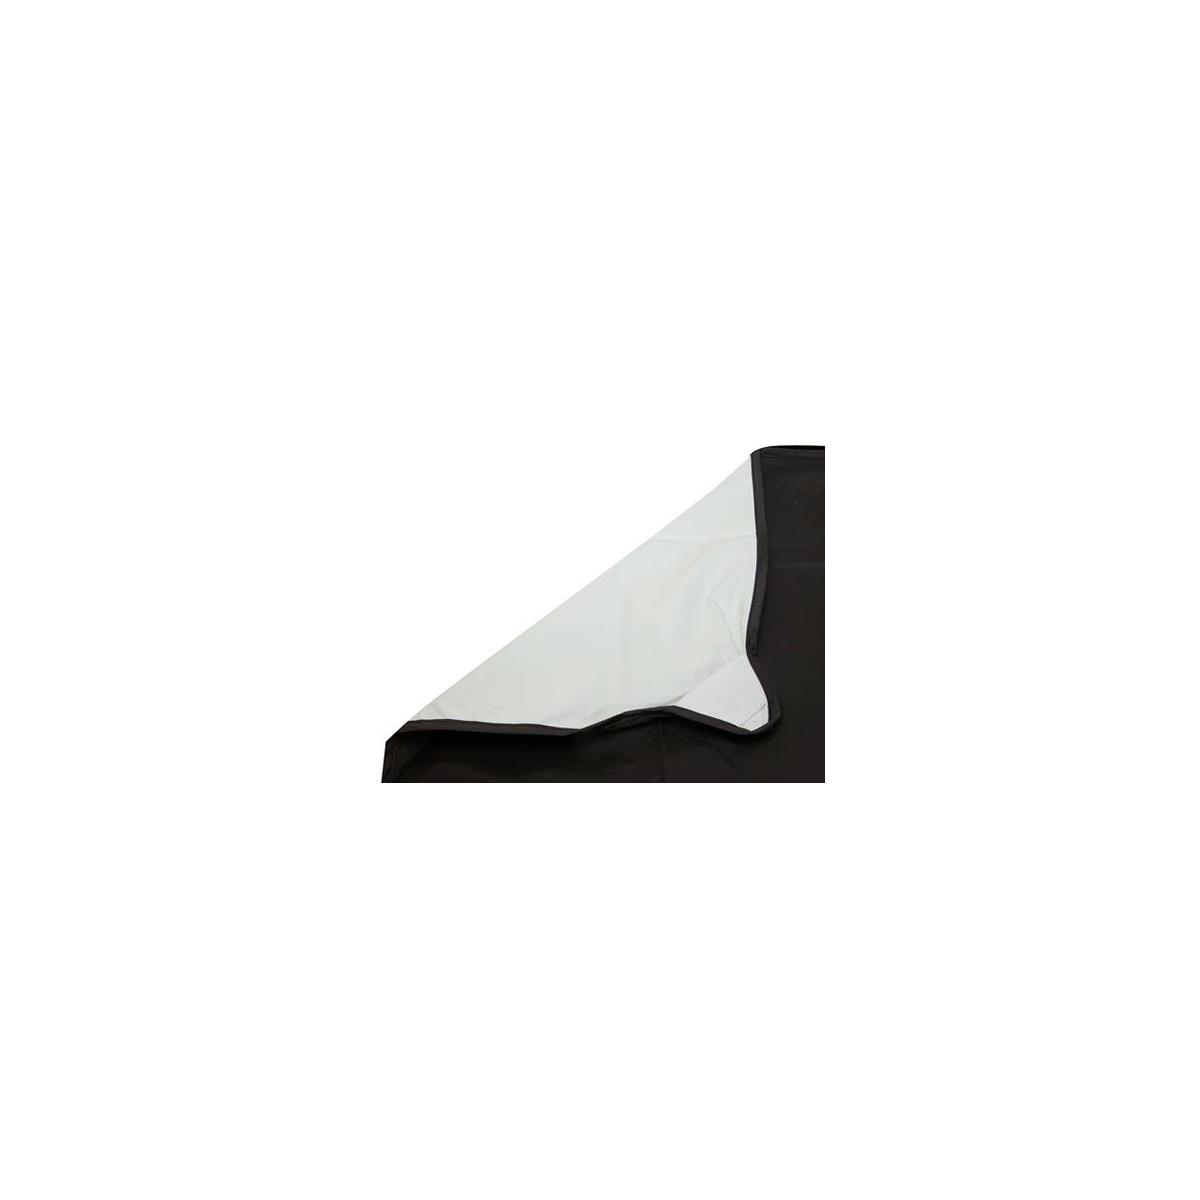 Image of Photoflex Litepanel 39in x 72in White / Black Fabric